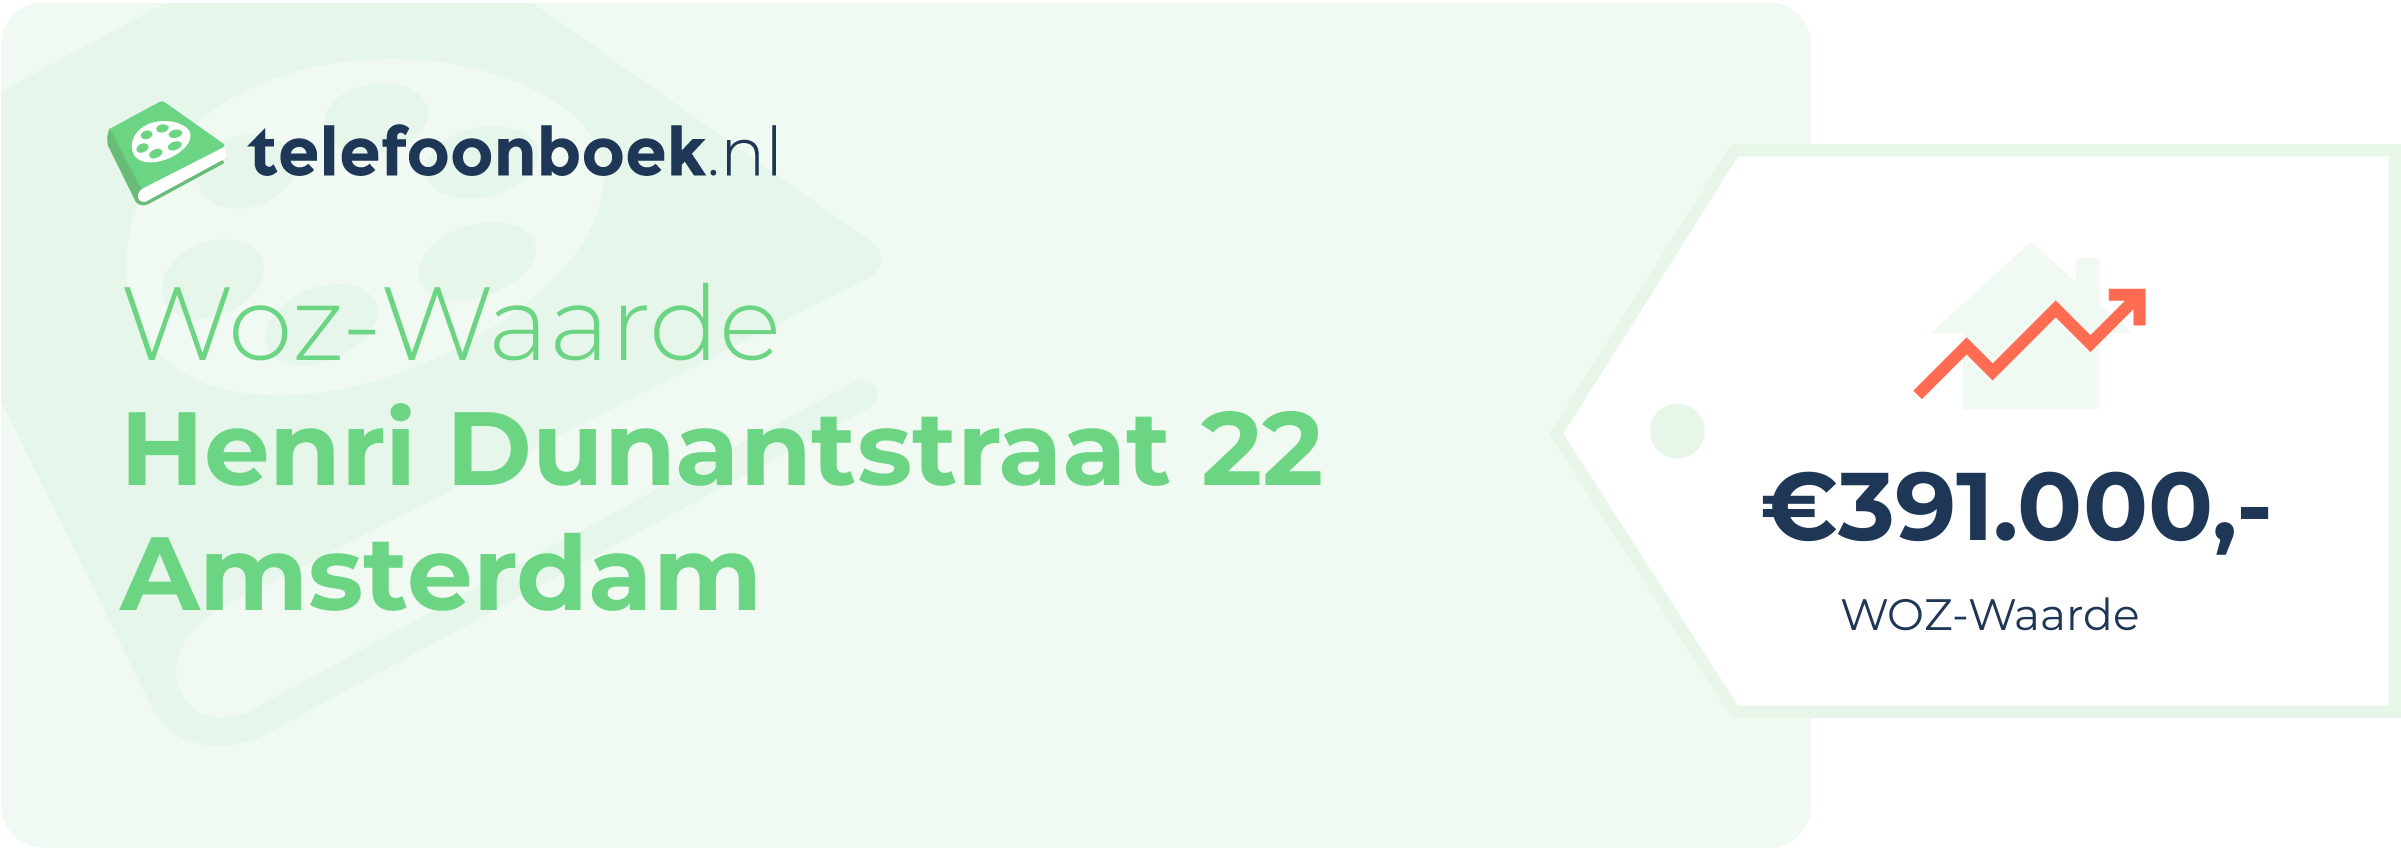 WOZ-waarde Henri Dunantstraat 22 Amsterdam